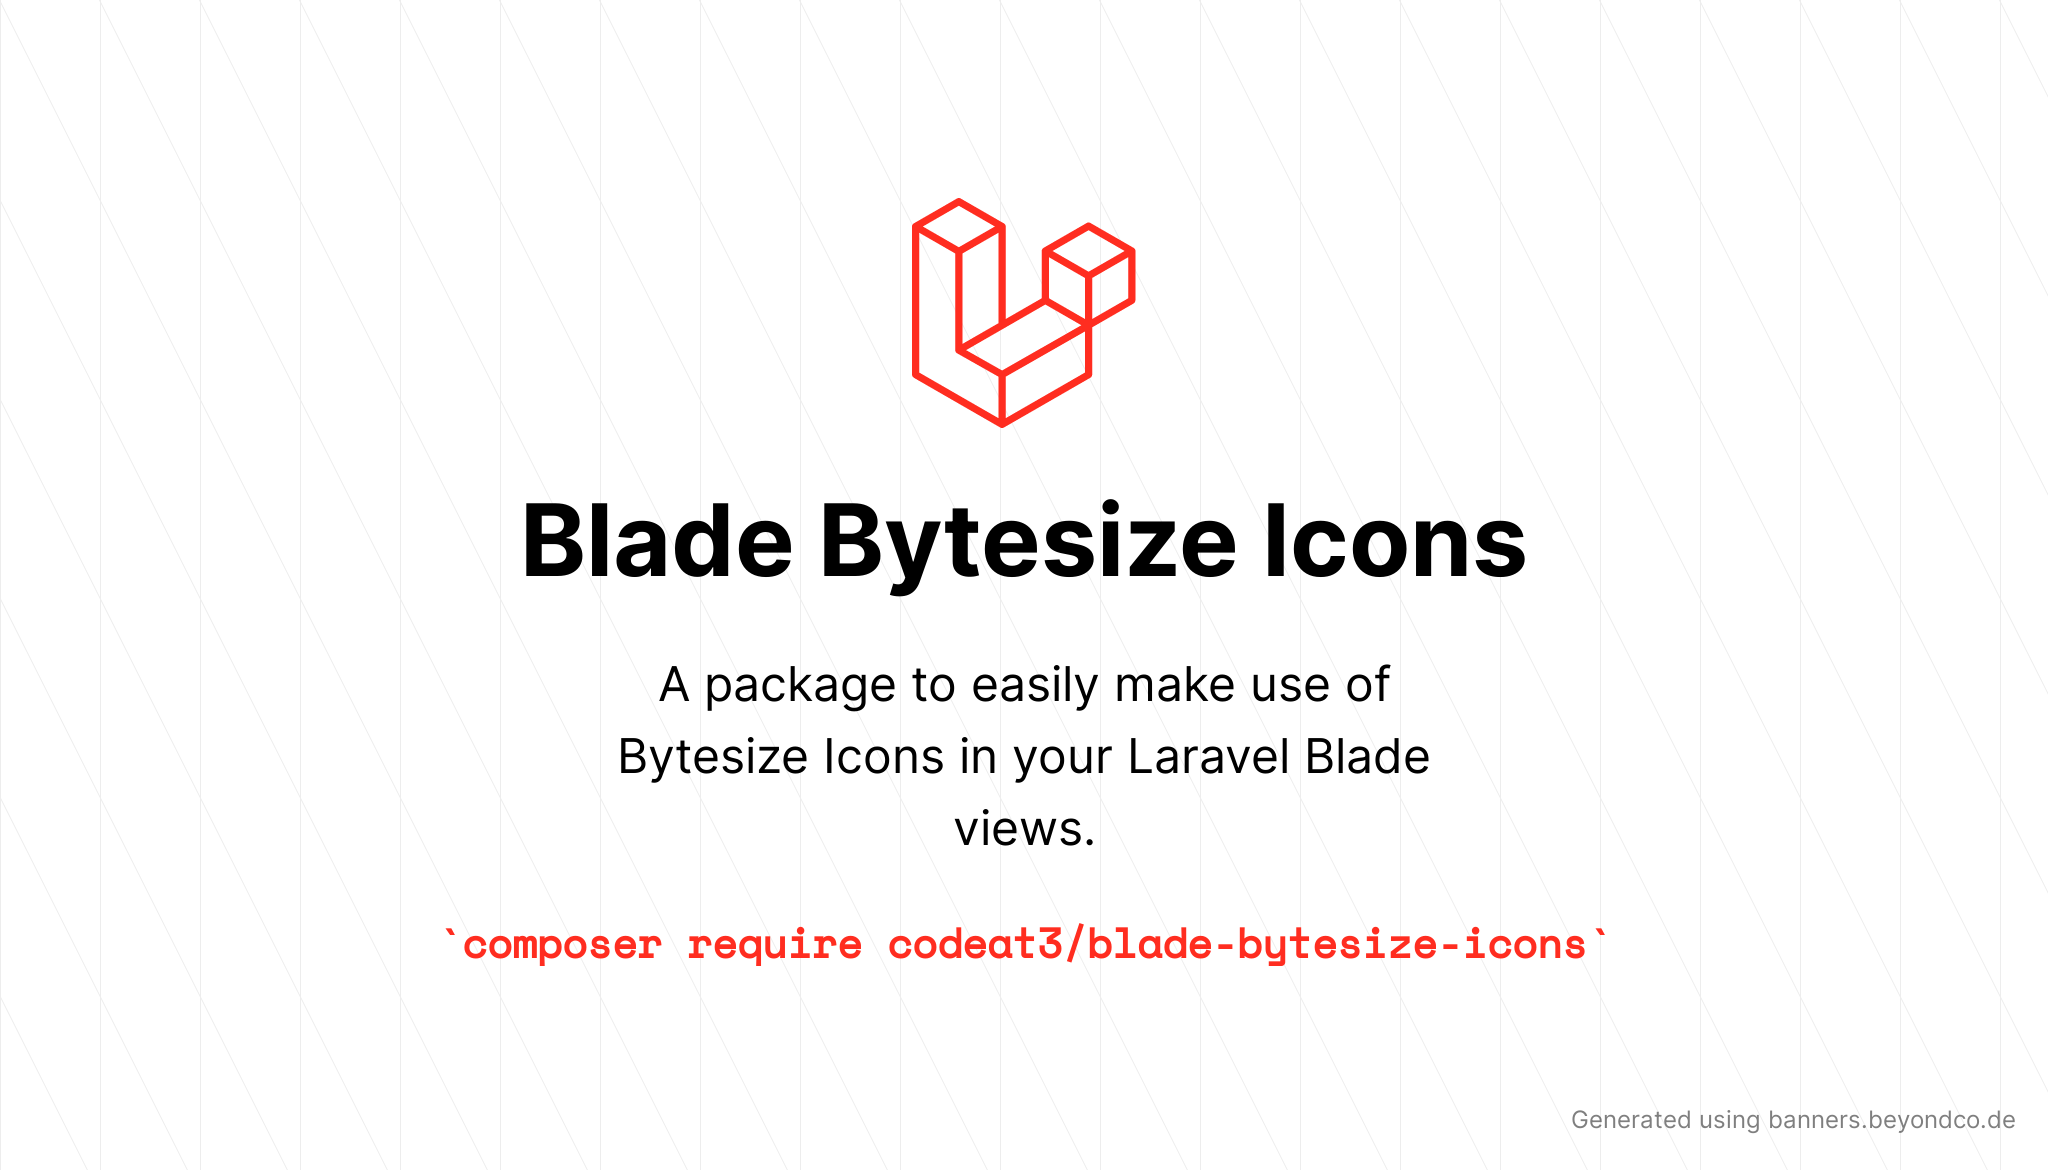 socialcard-blade-bytesize-icons.png